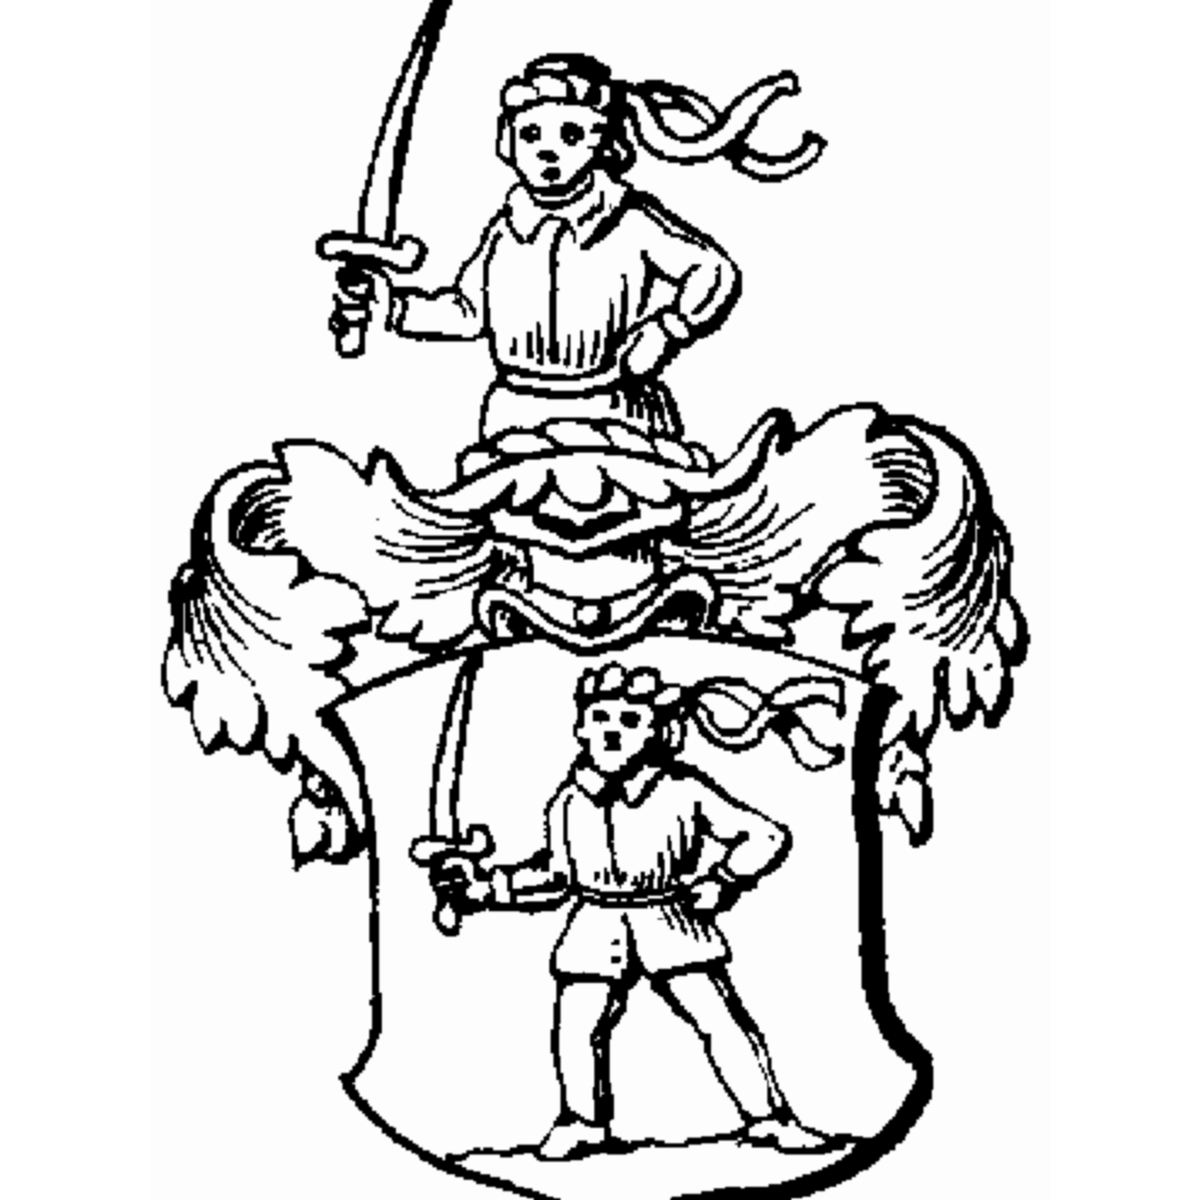 Coat of arms of family Mekelenborgh